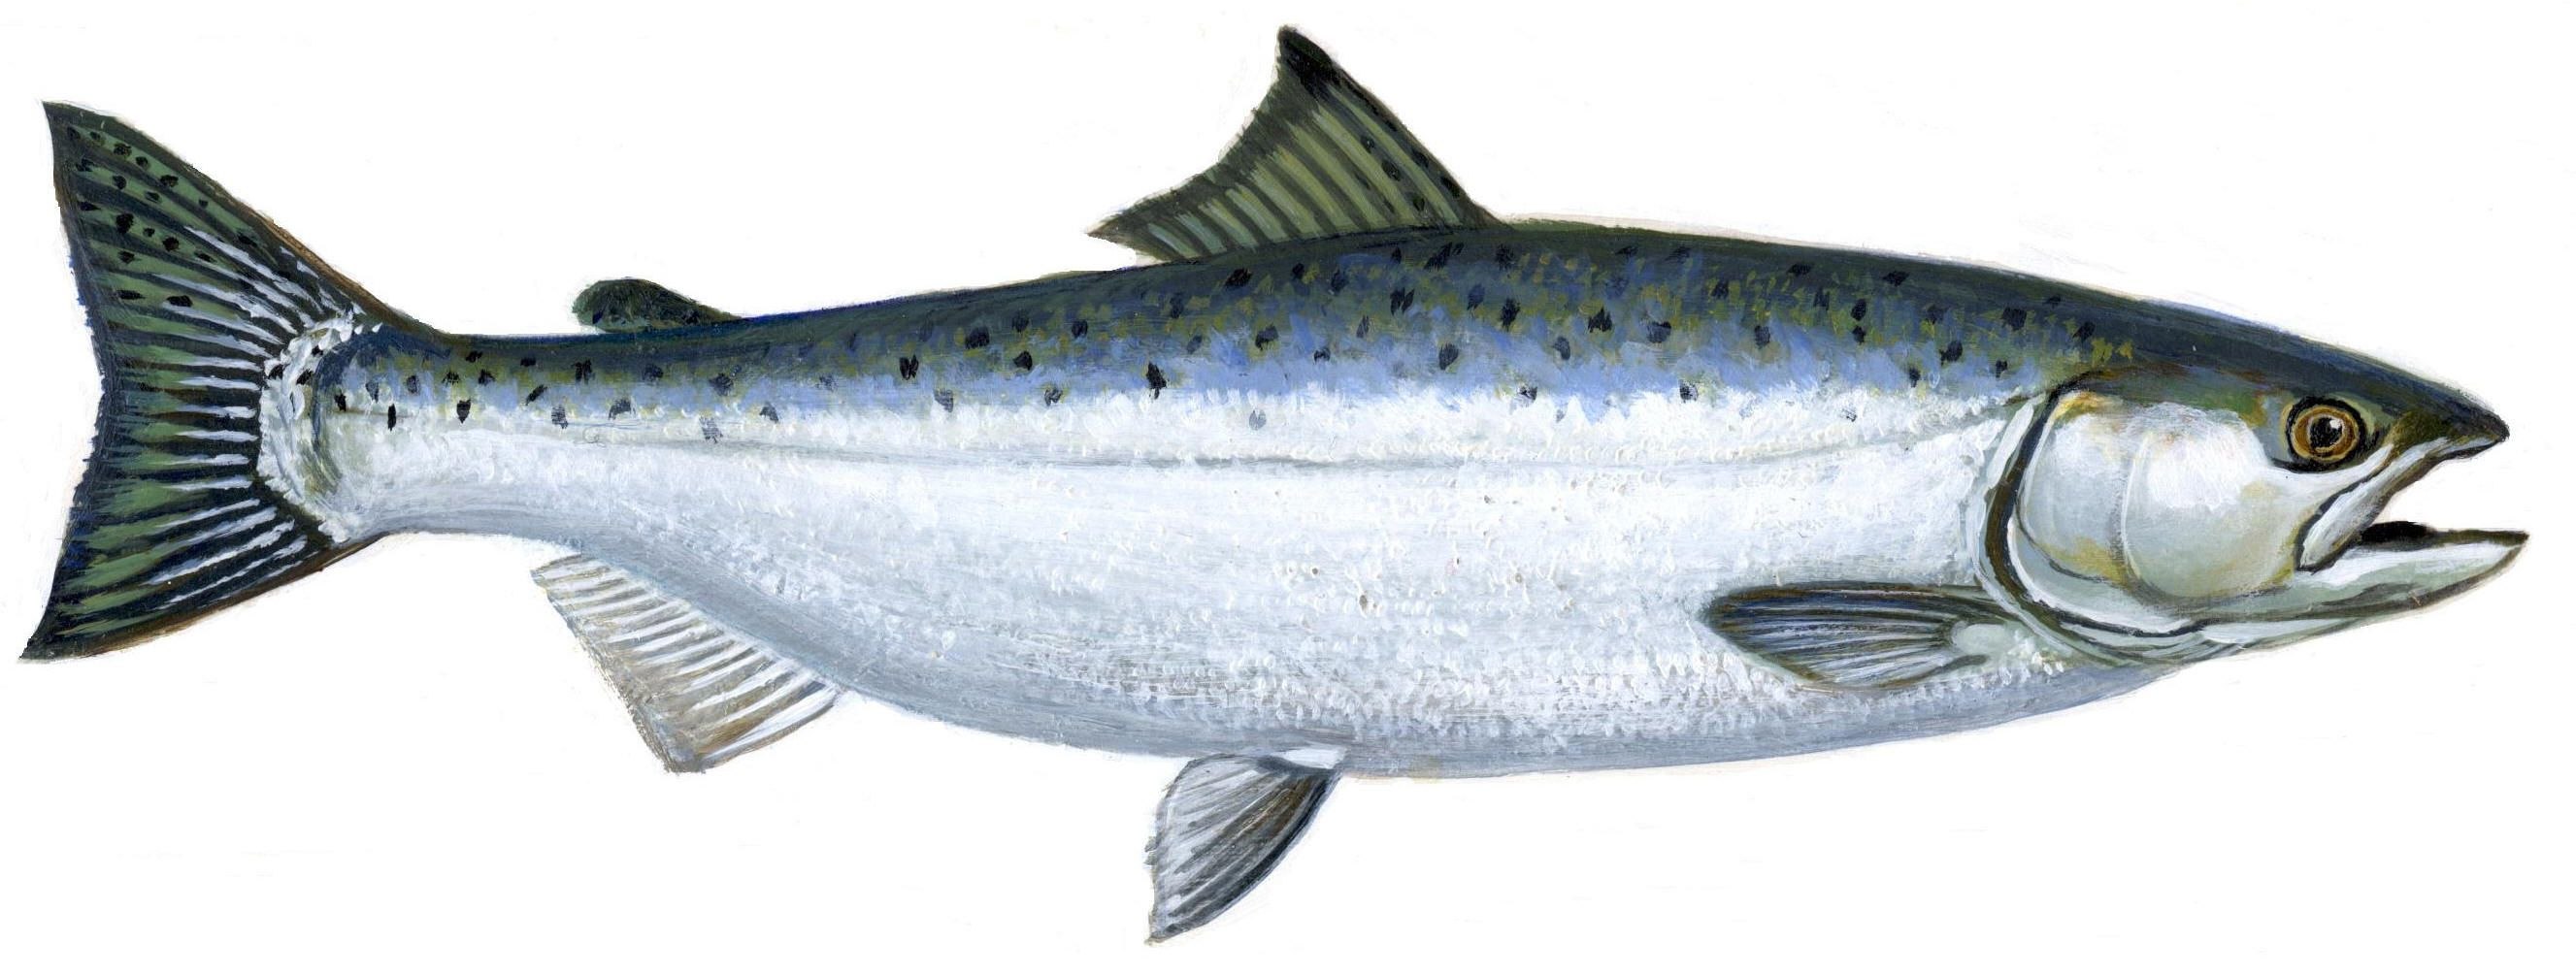 Лососевая рыба 7. King Salmon (Chinook). Кижуч (Oncorhynchus kisutch). Лосось AQUADVANTAGE. Атлантический лосось AQUADVANTAGE.